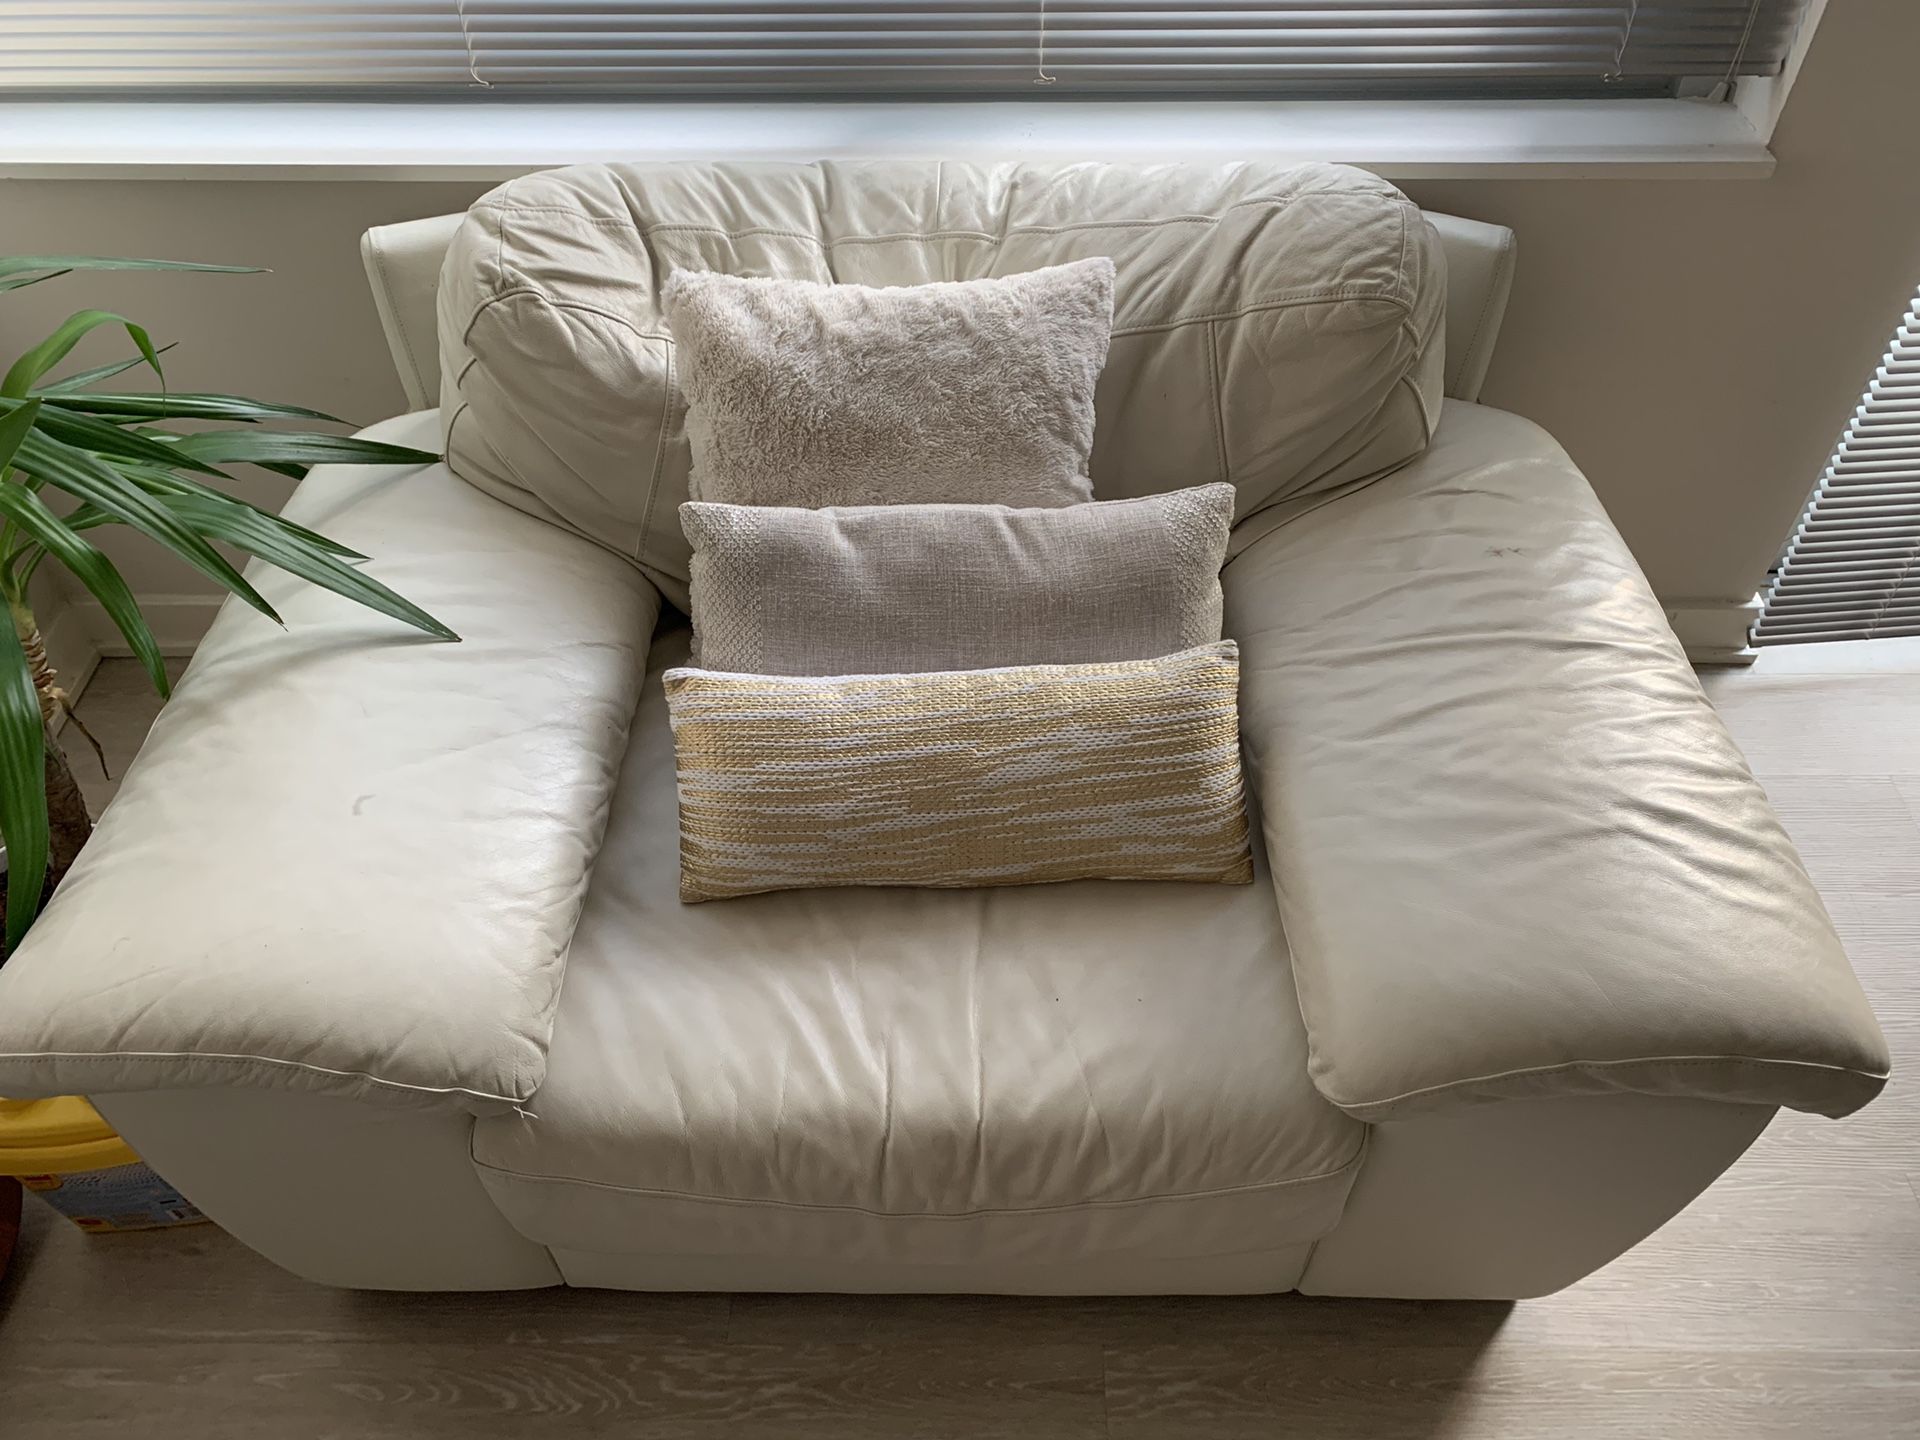 White Leather Chair, Plush rug, Arm Chair, and Ottoman